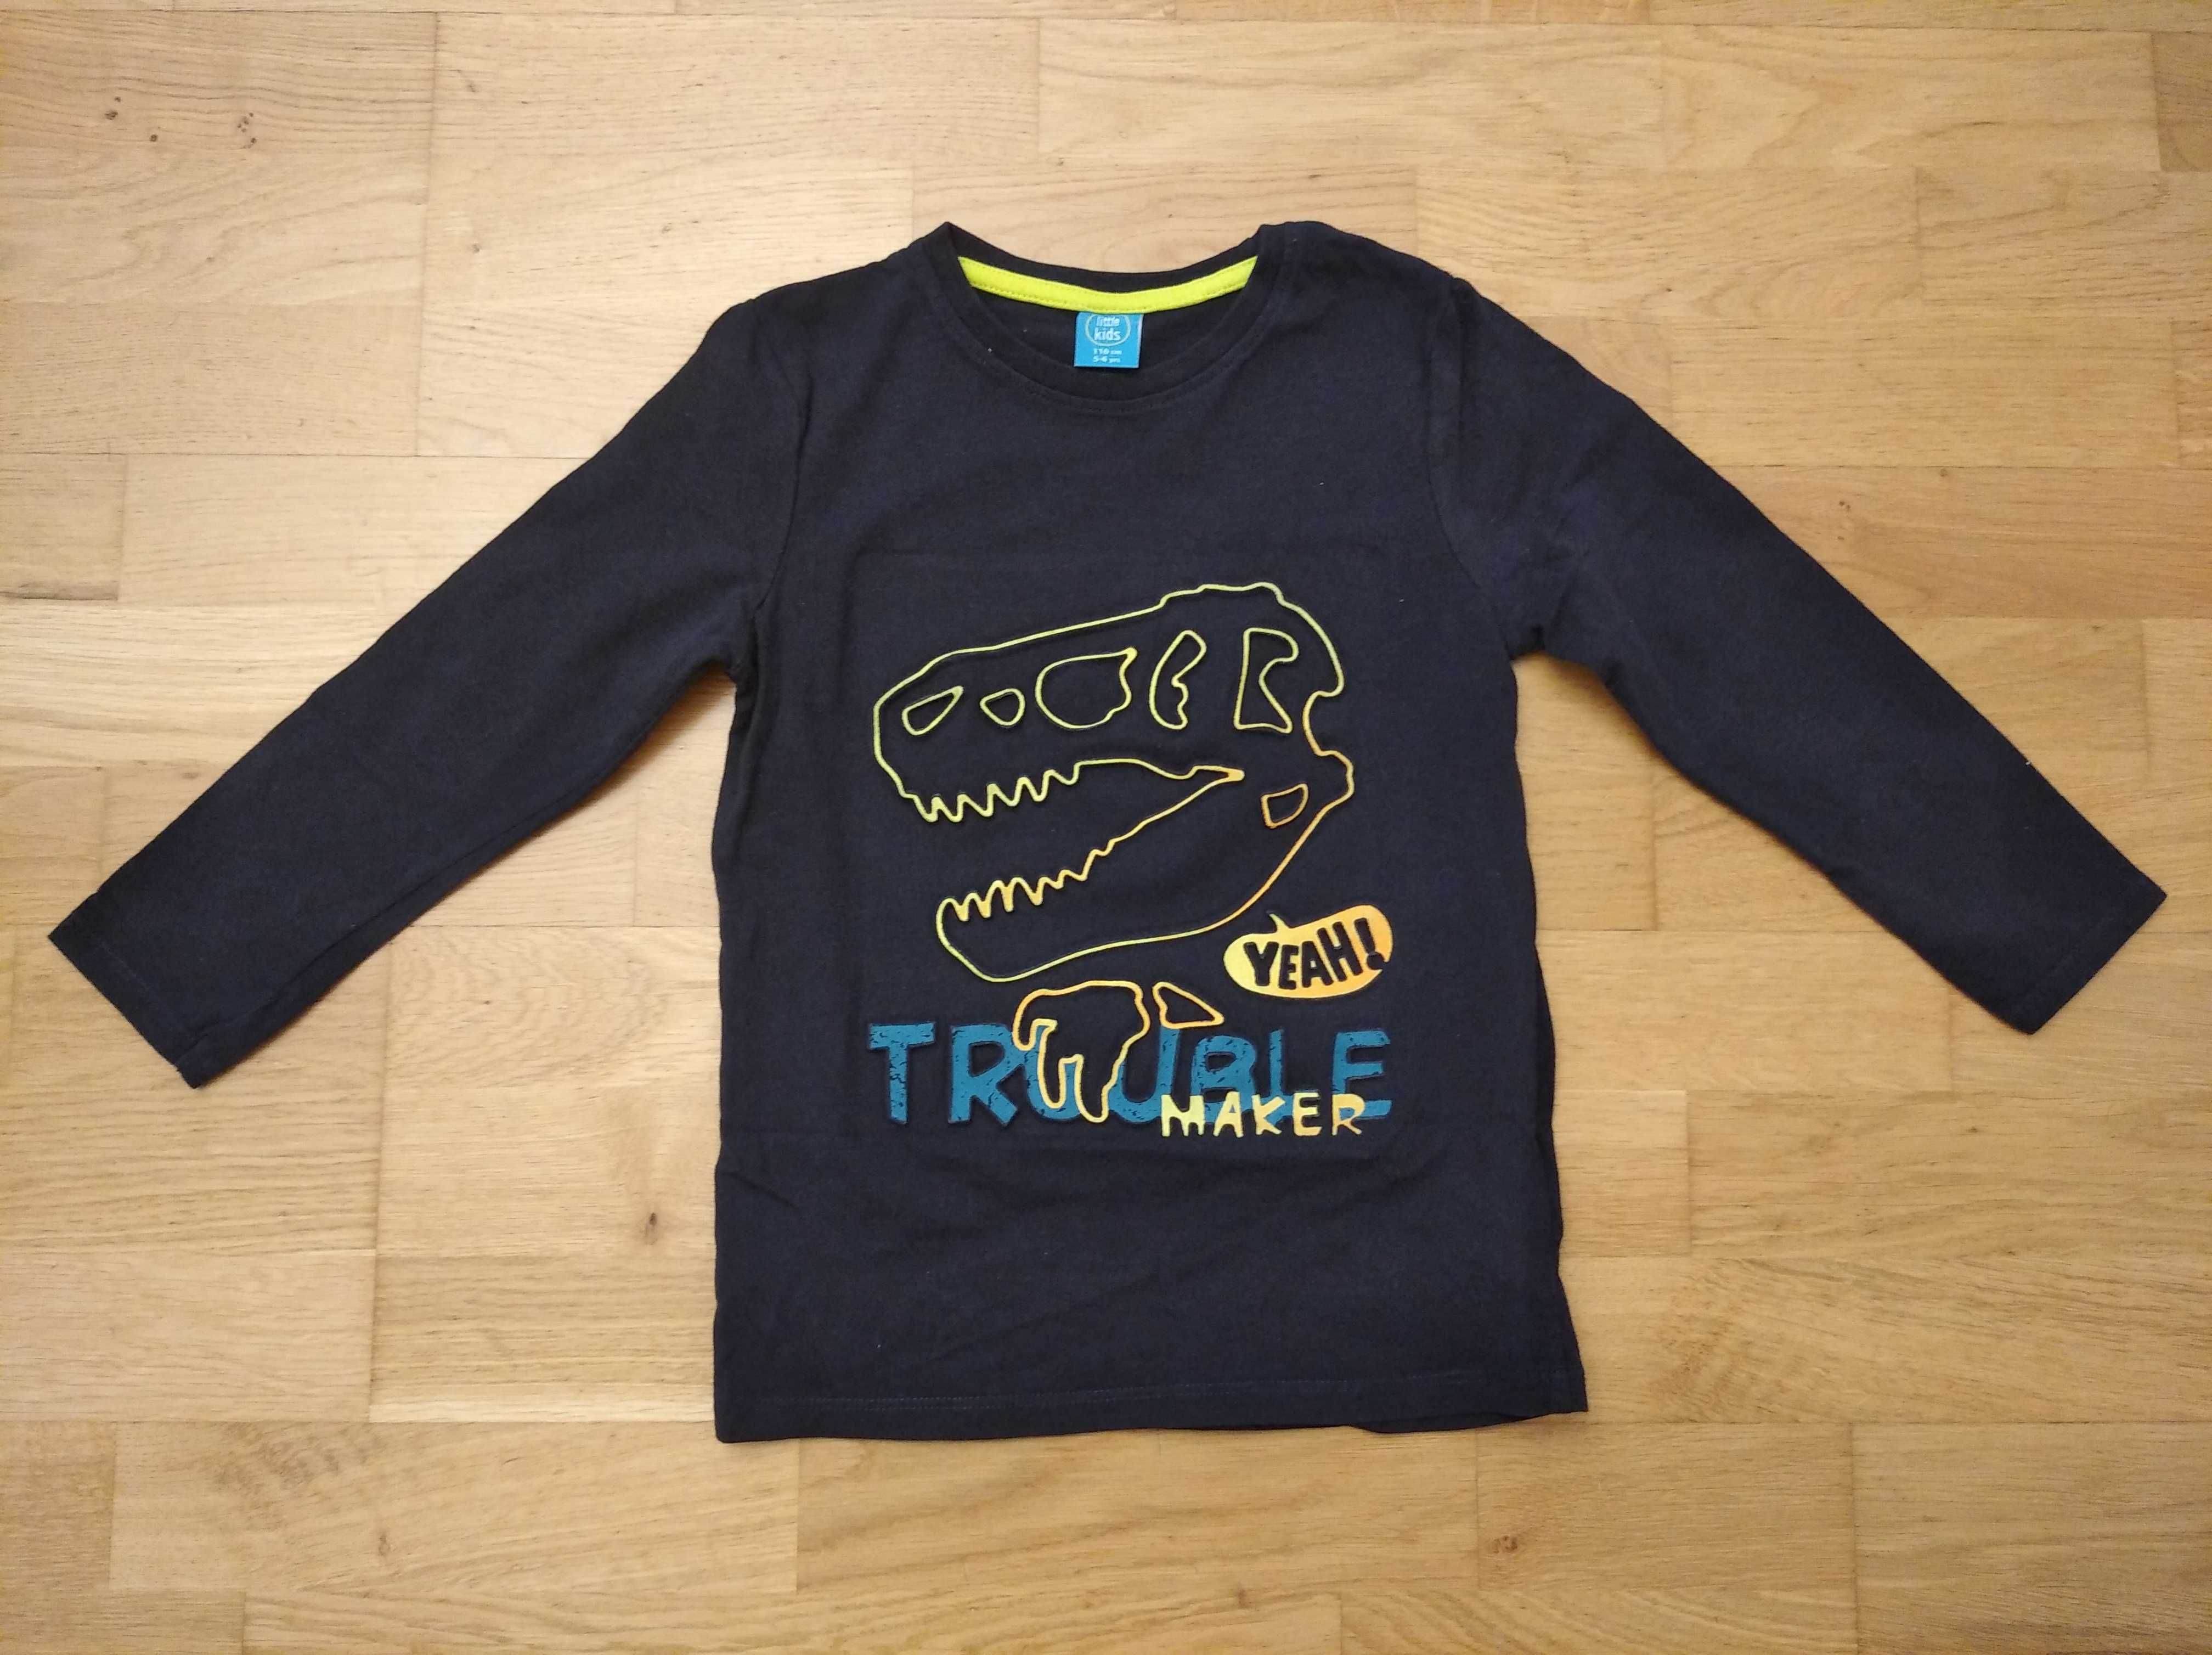 Bluzka Little Kids 116 dinozaur chłopięca długi rękaw koszulka t-shirt